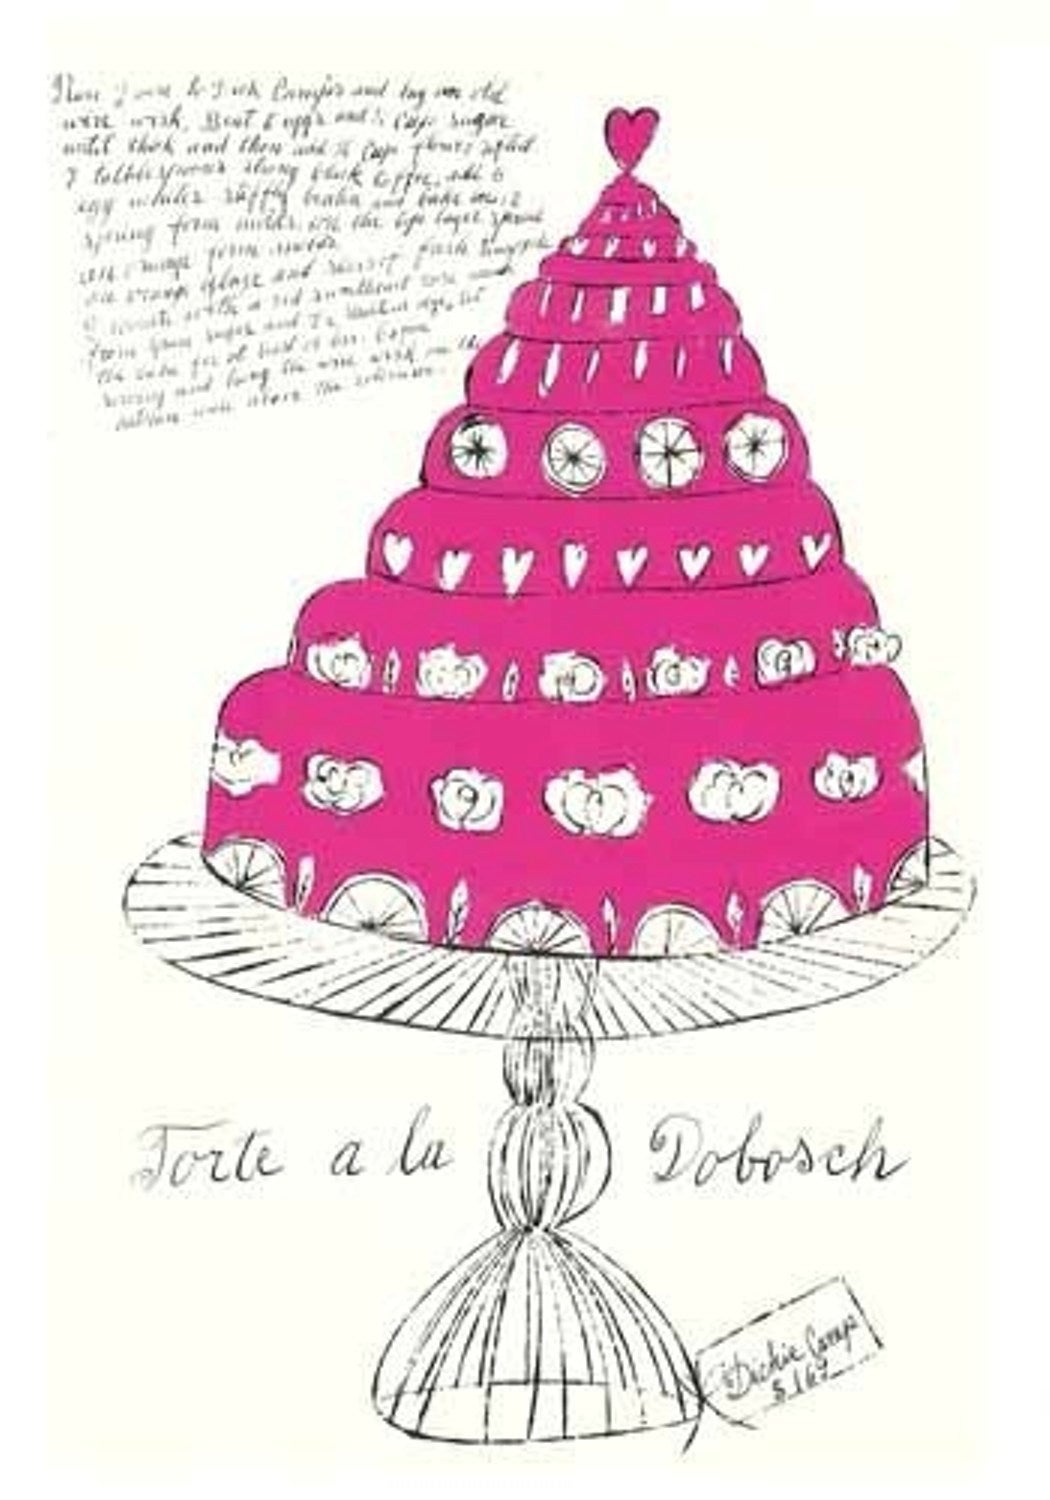 Torte a la Dobosch from Wild Raspberries series - Print by Andy Warhol